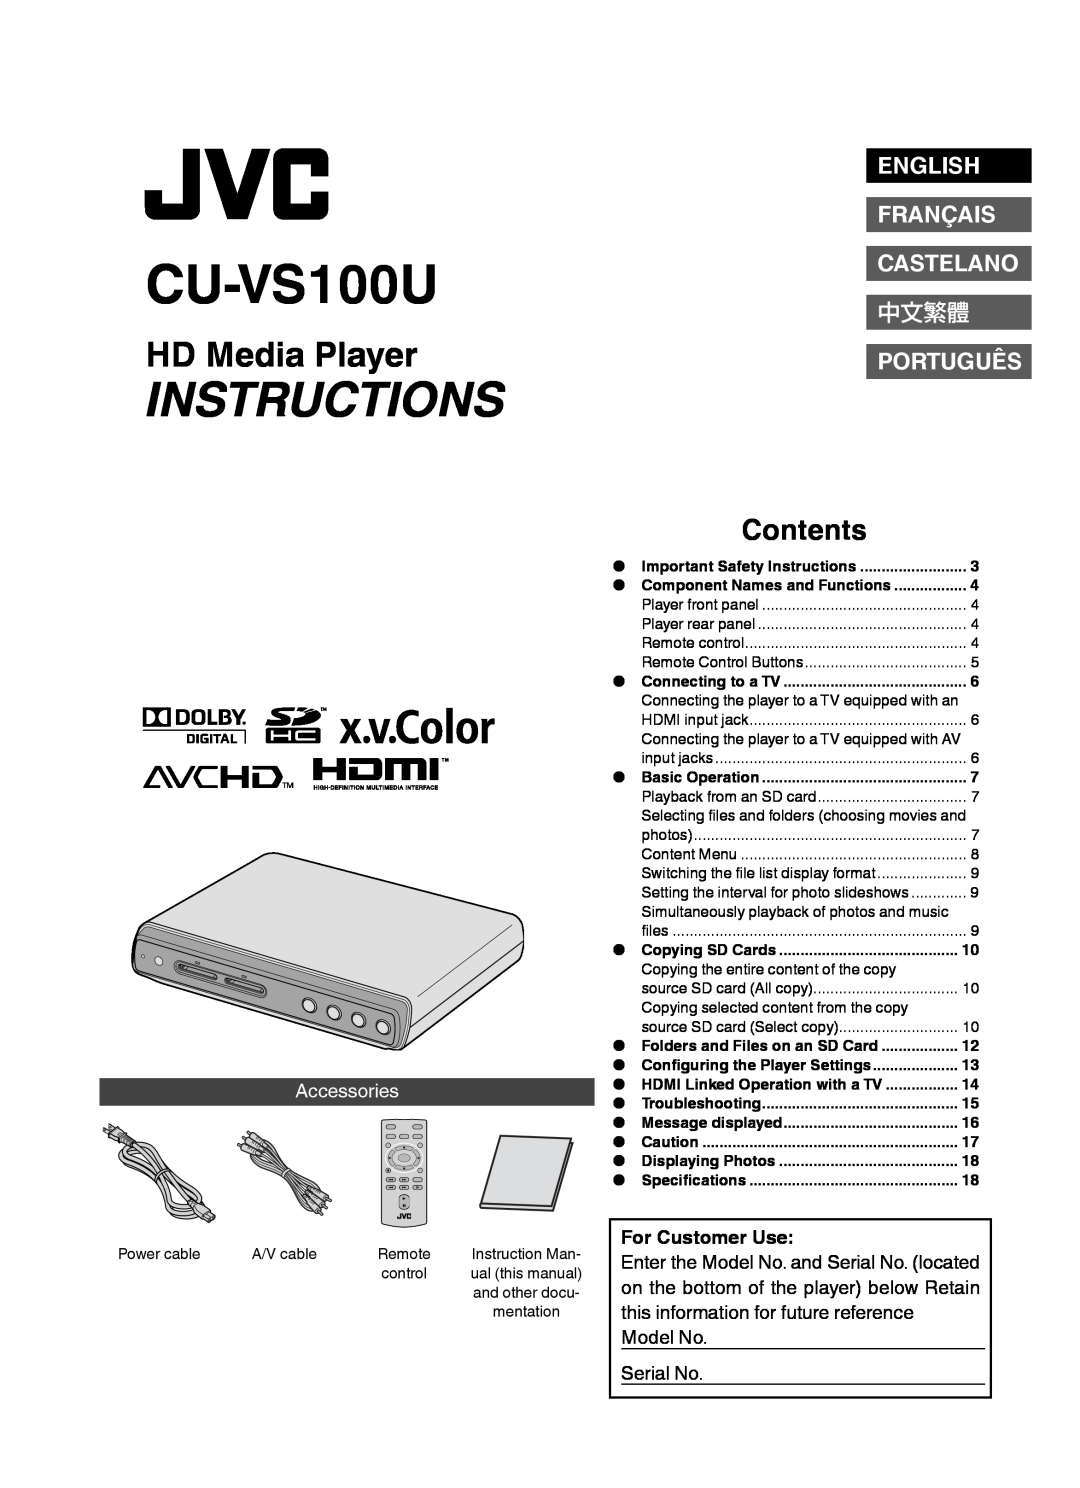 JVC CU-VS100U instruction manual HD Media Player, English Français Castelano, 中文繁體, Português, Accessories, Serial No 